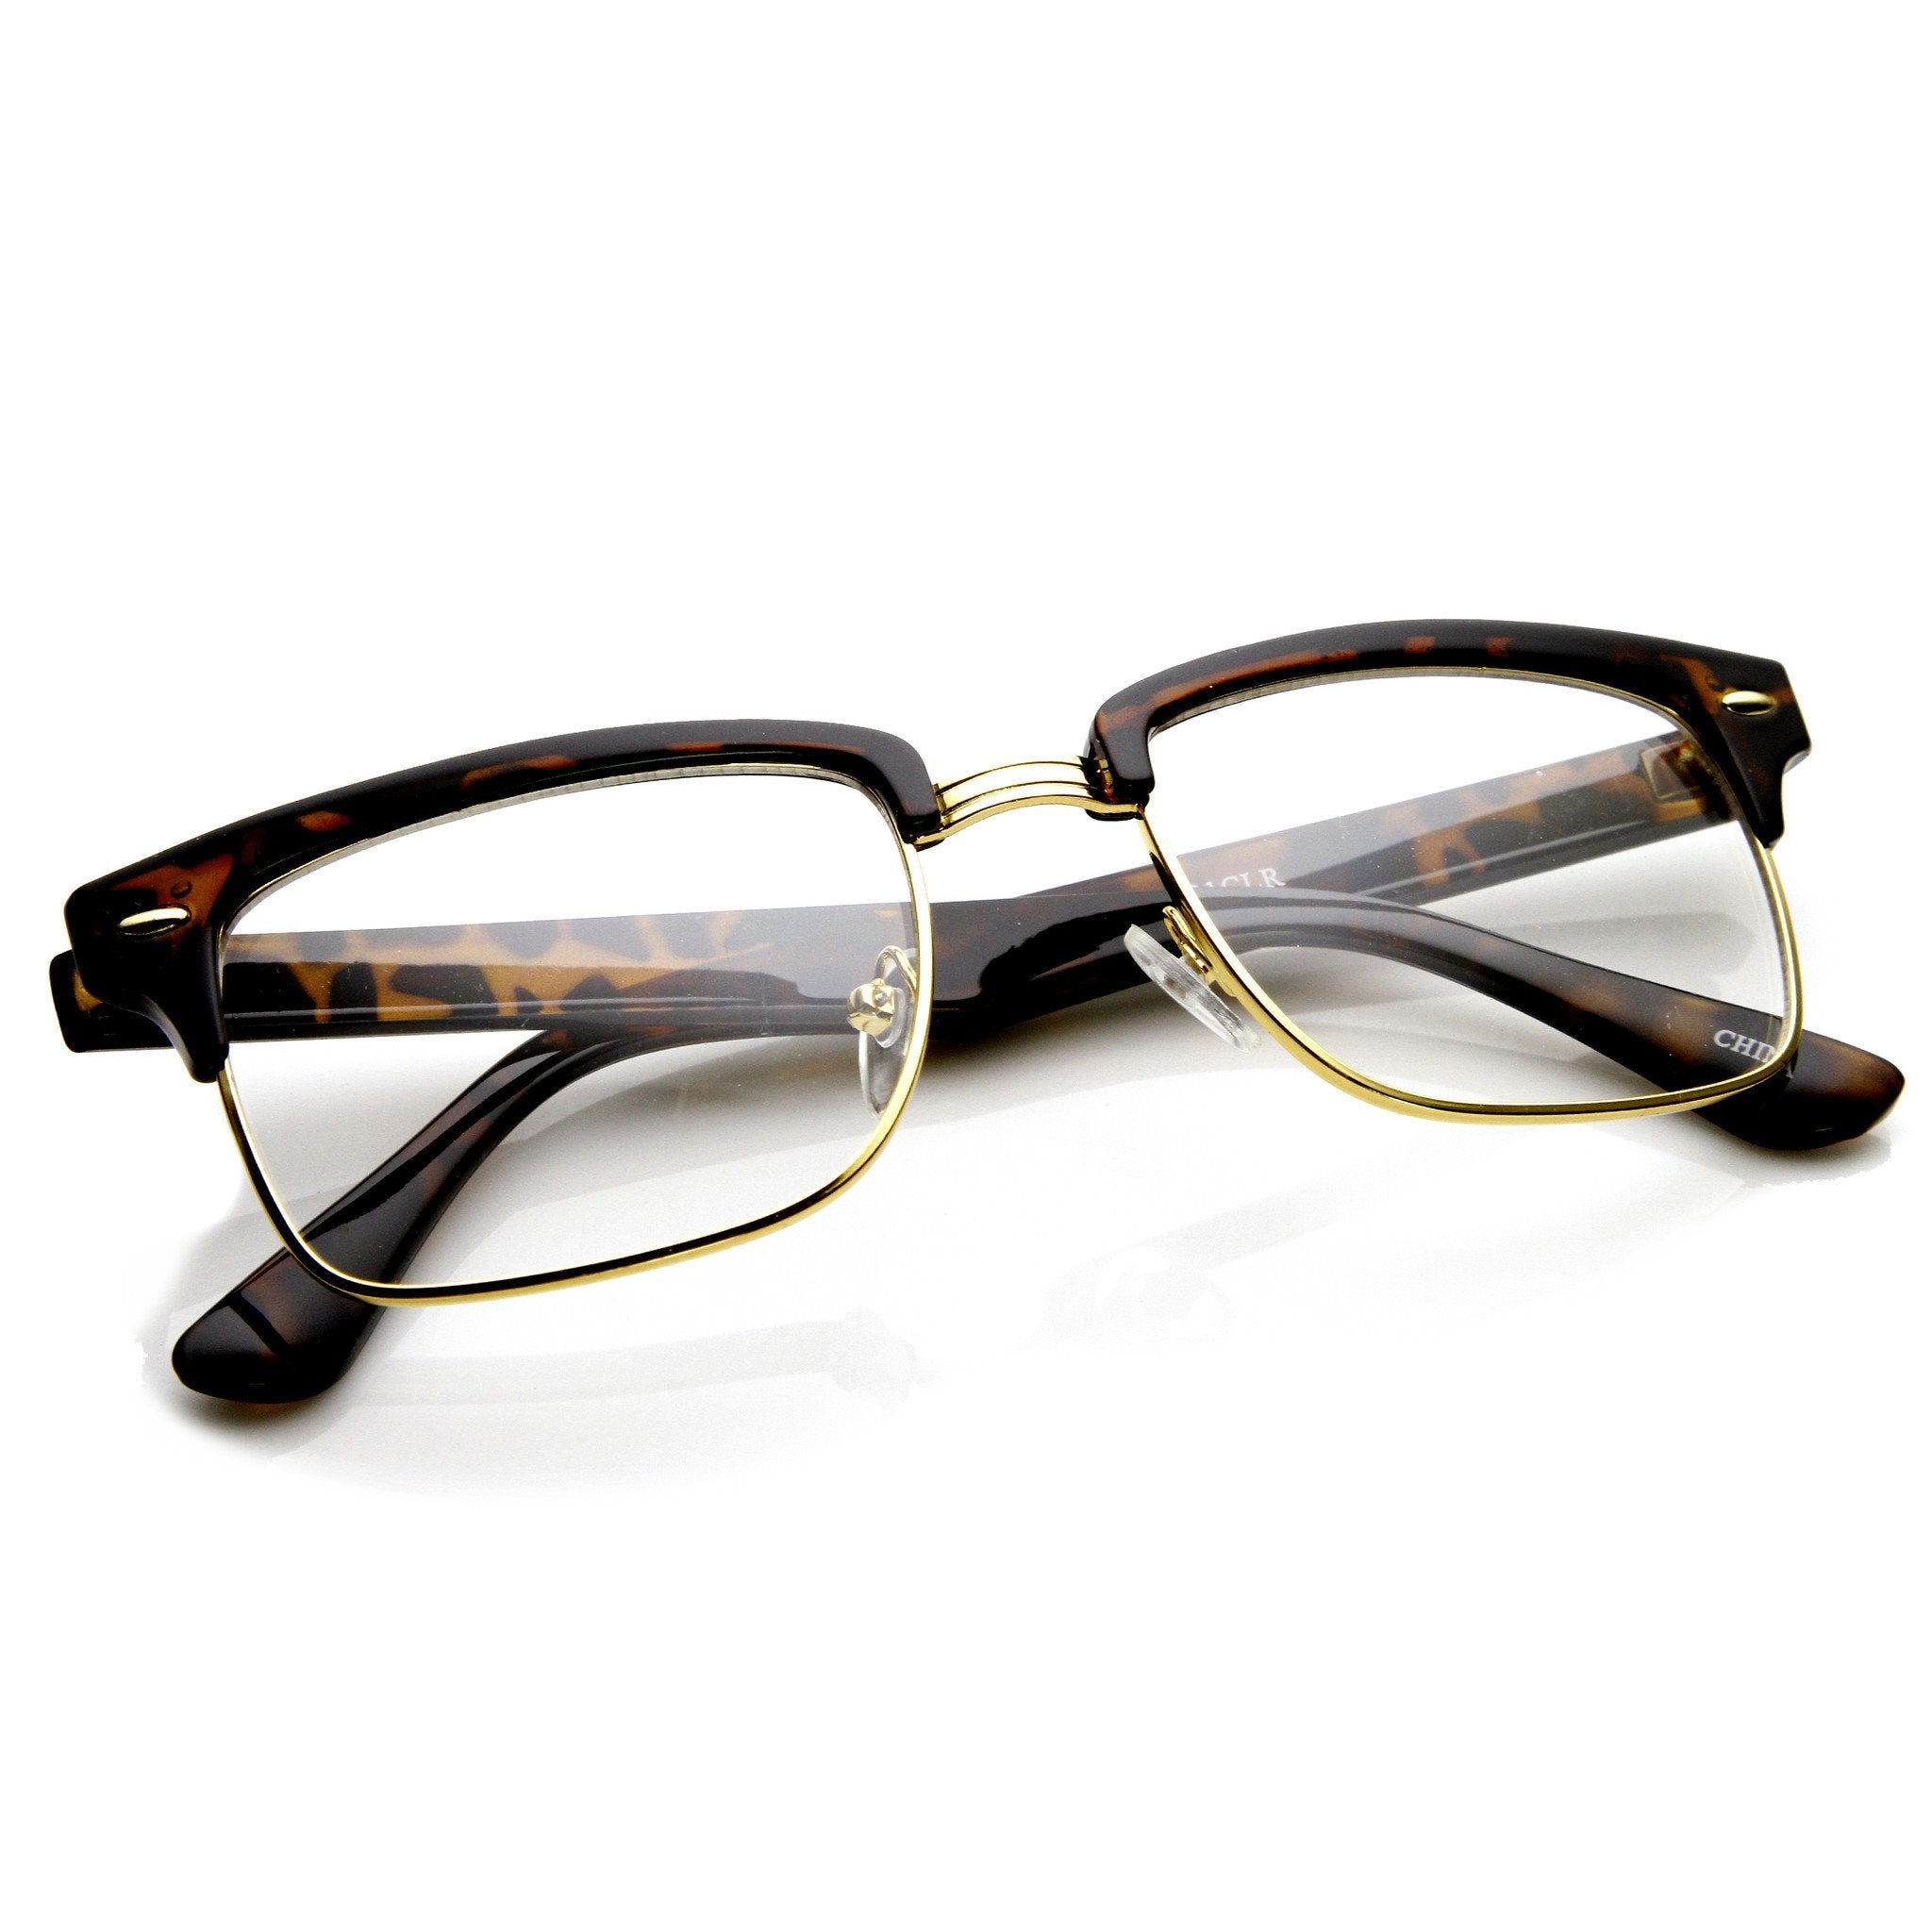 VINTAGE Inspired Classic Half Frame Clear Lens Glasses BLACK/ GOLD